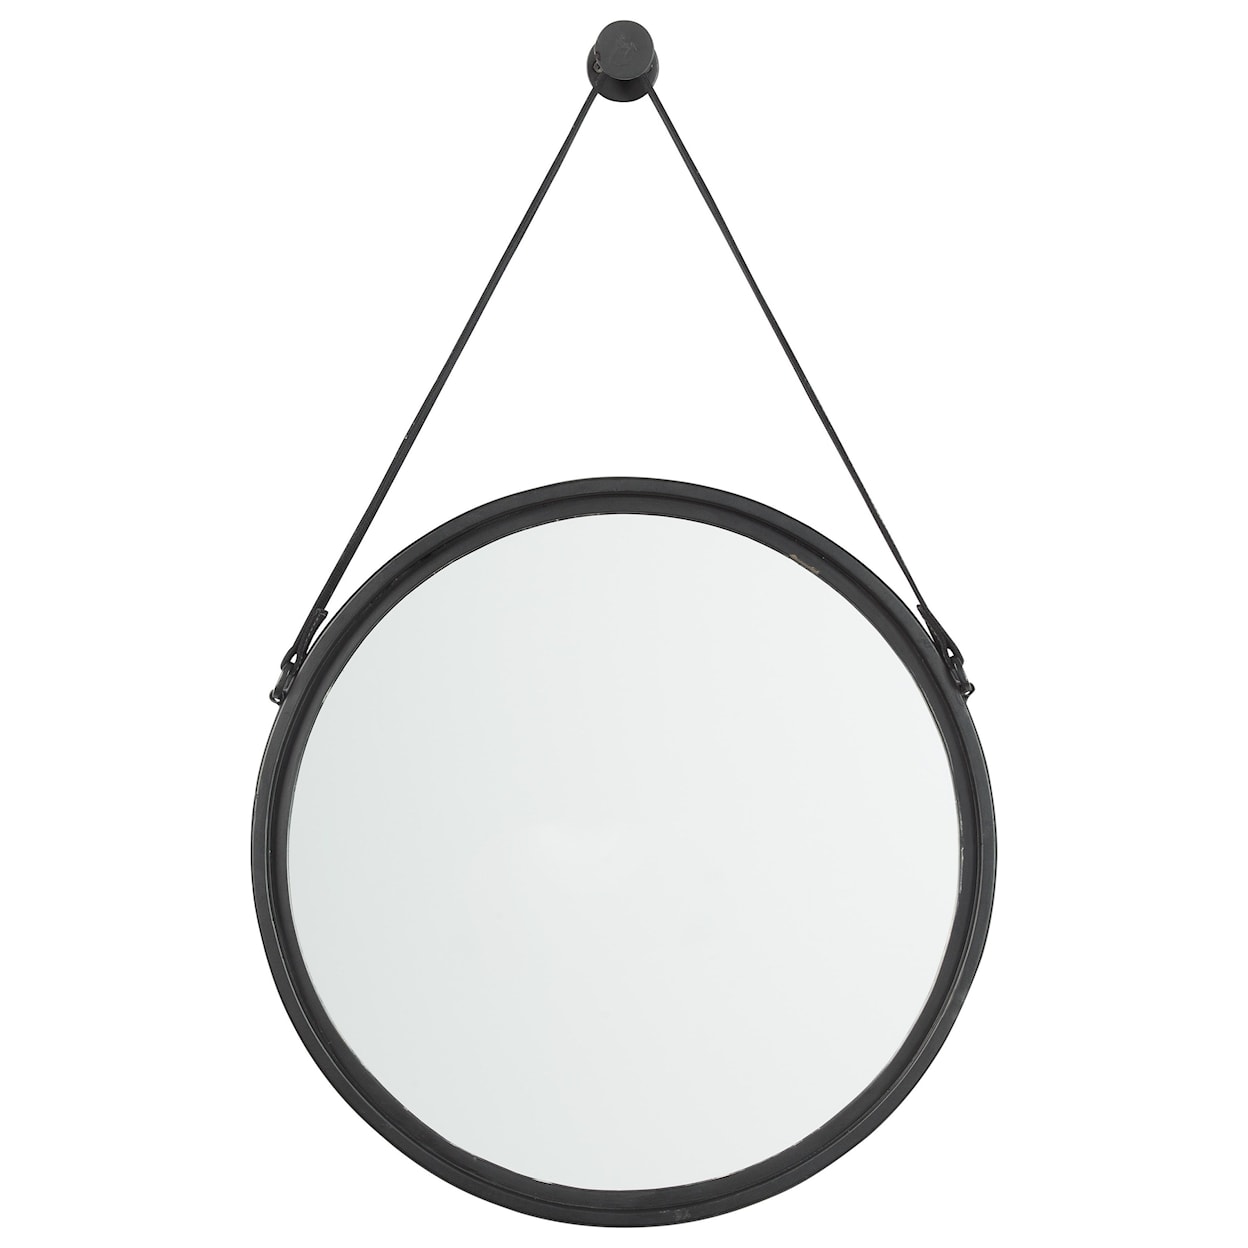 Signature Design by Ashley Accent Mirrors Dusan Black Accent Mirror